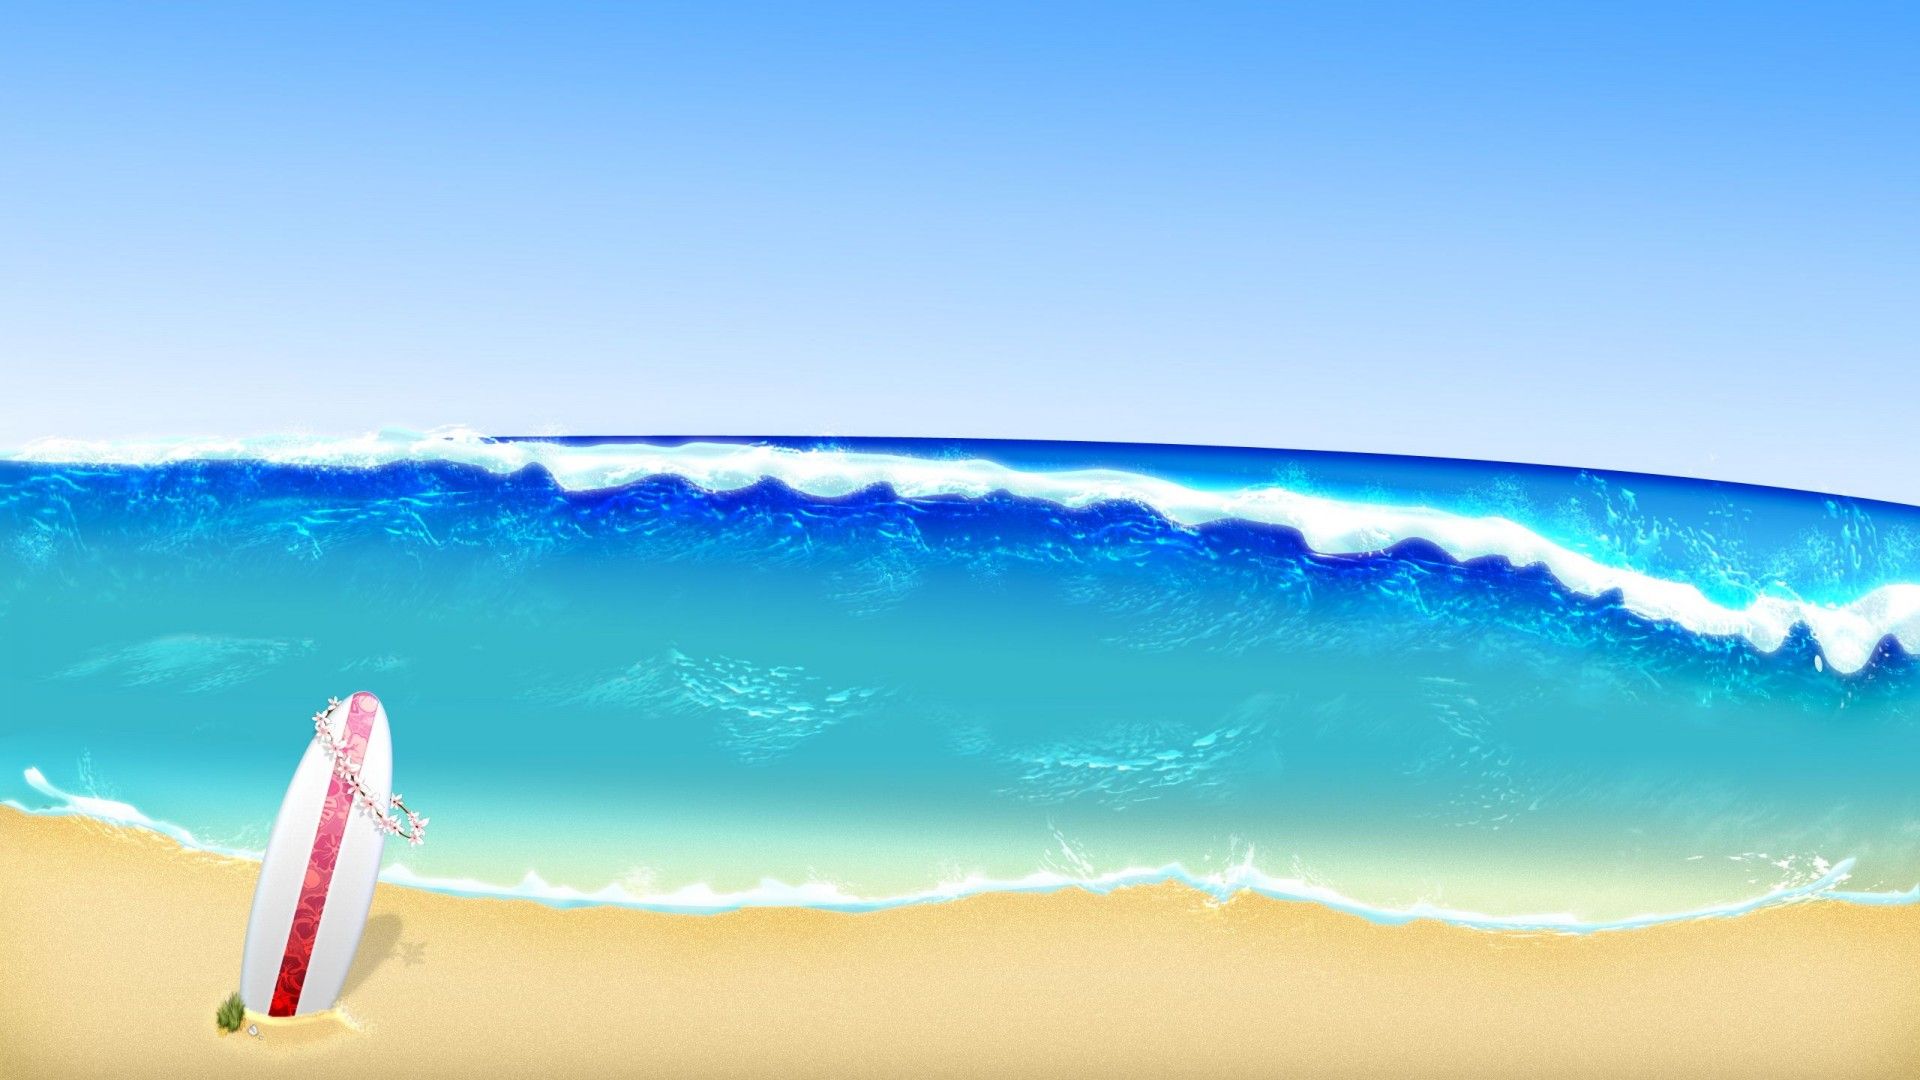 Surfing Desktop Background, High Definition, High Quality, Widescreen